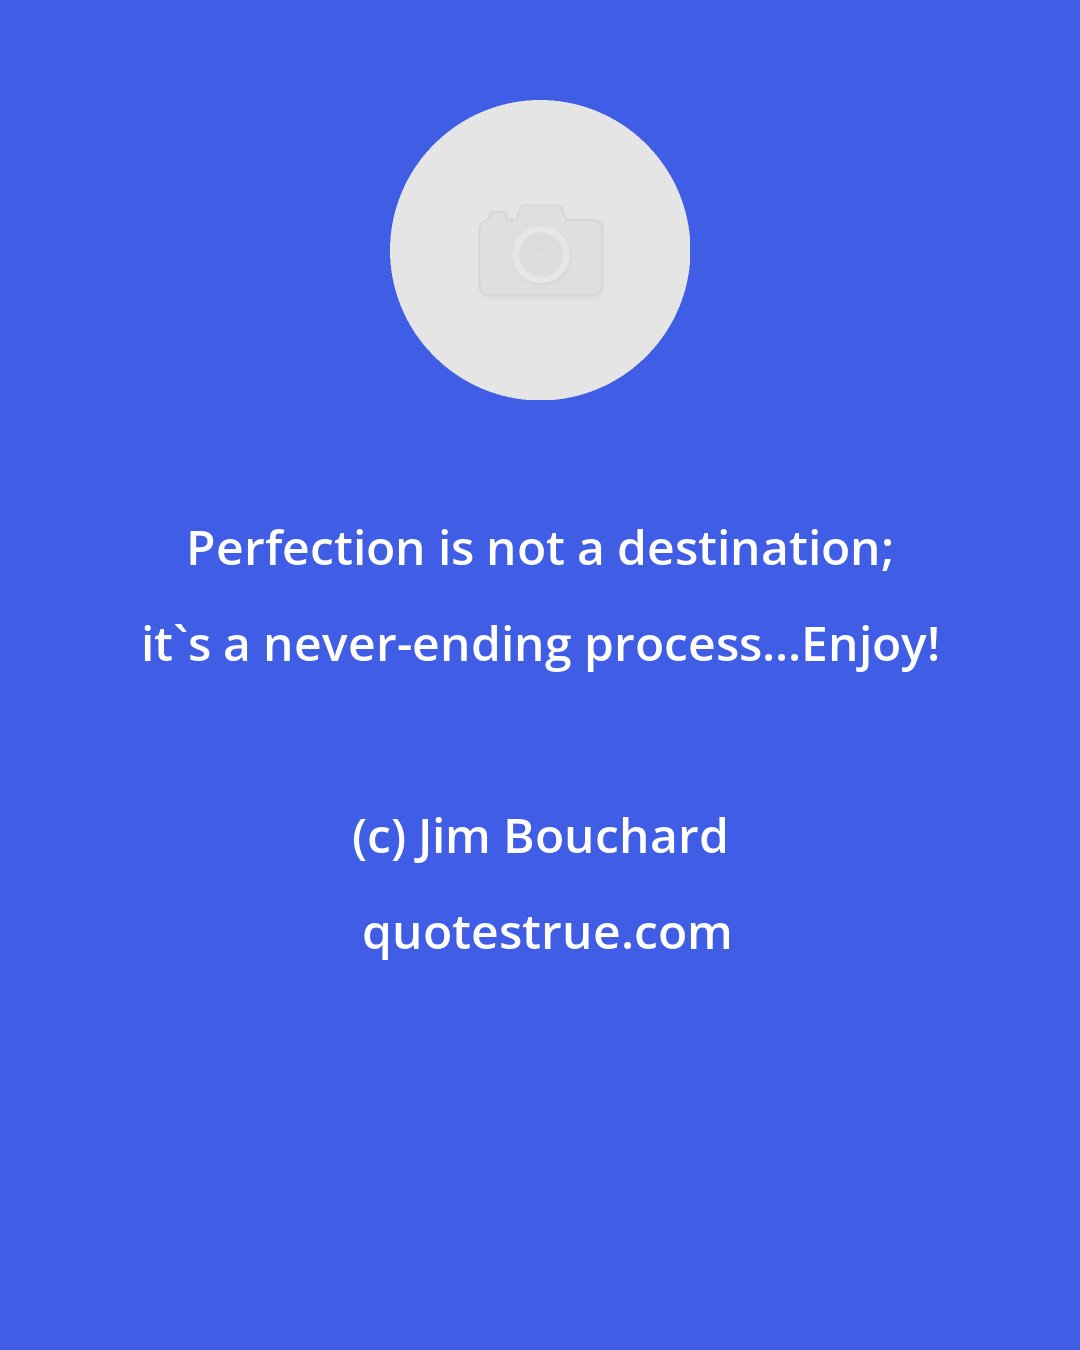 Jim Bouchard: Perfection is not a destination; it's a never-ending process...Enjoy!